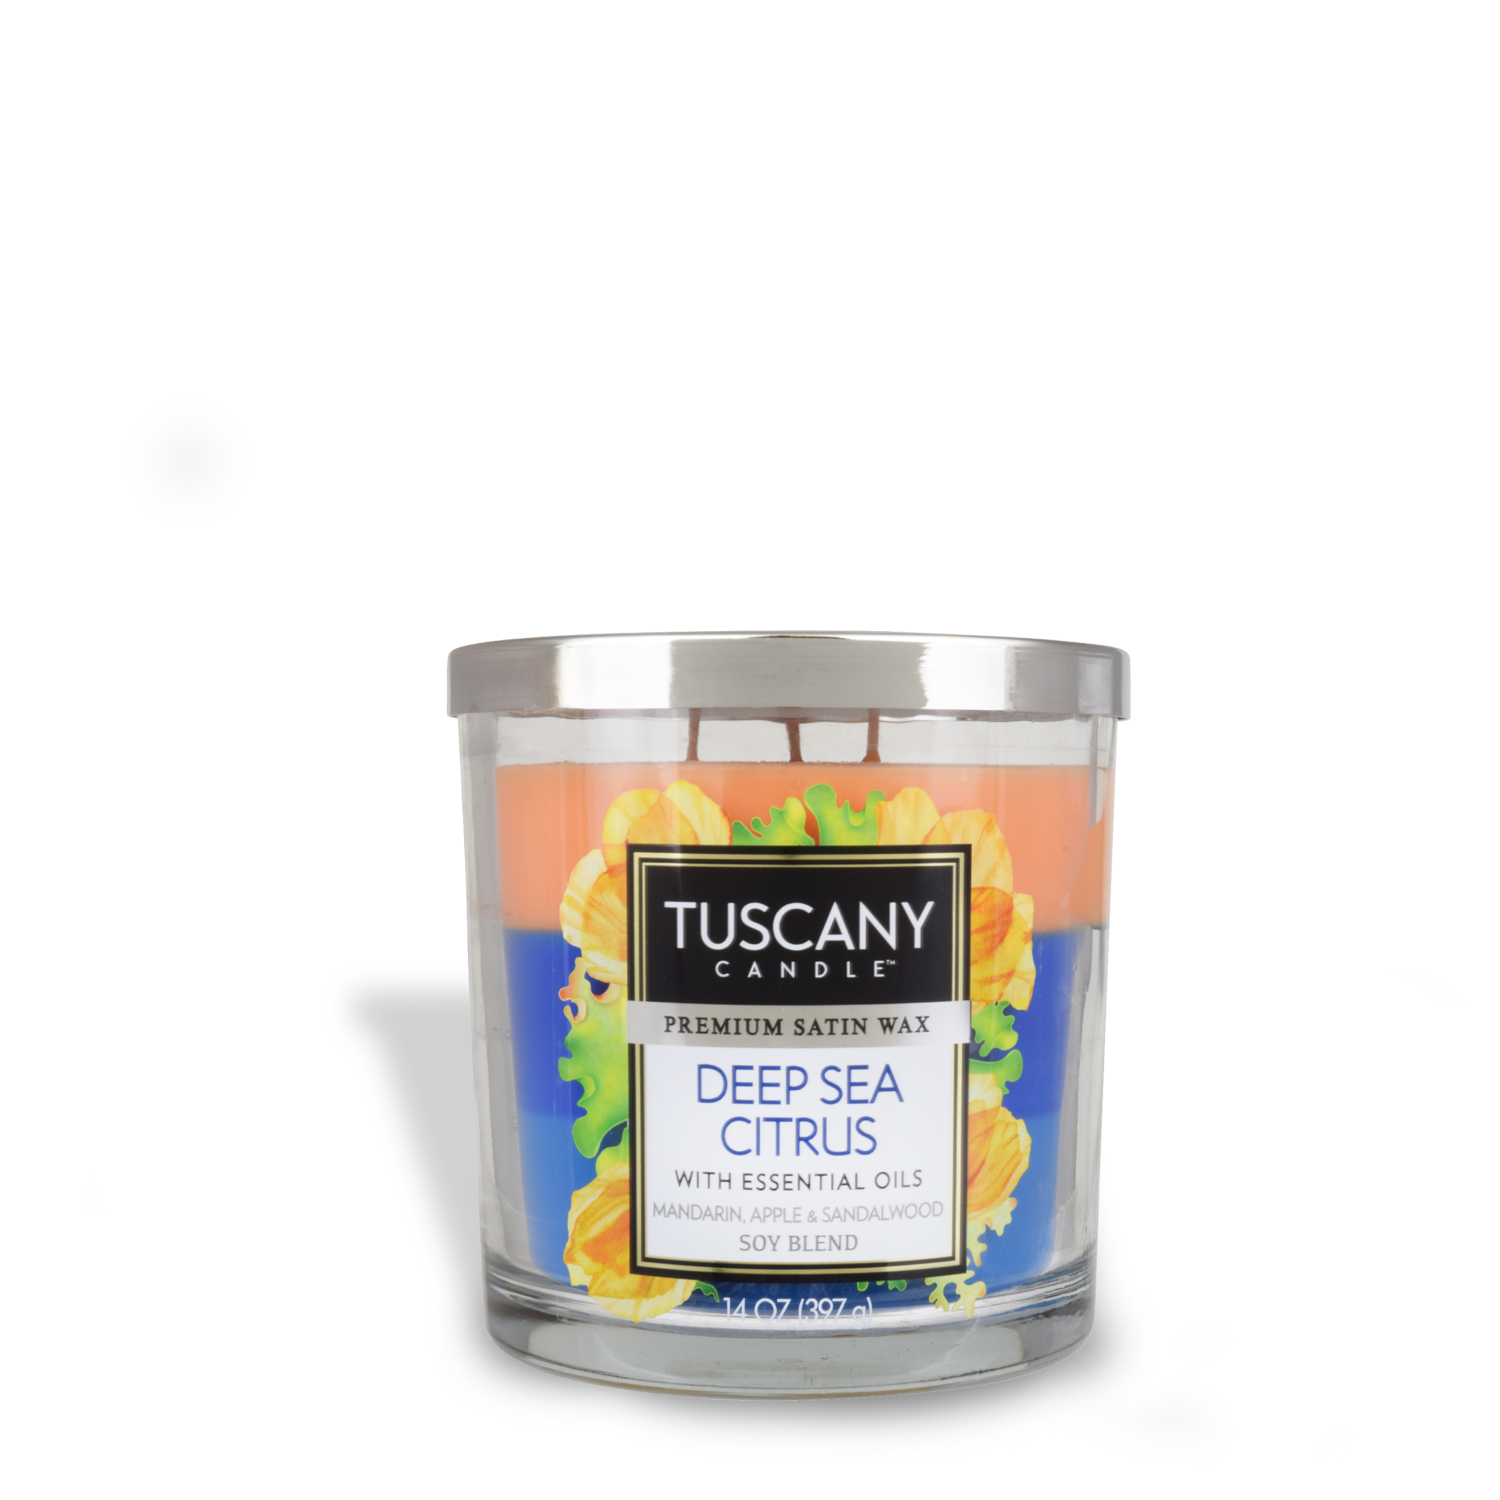 Tuscany Candle's Deep Sea Citrus Long-Lasting Scented Jar Candle (14 oz) with Deep Sea Citrus aroma.